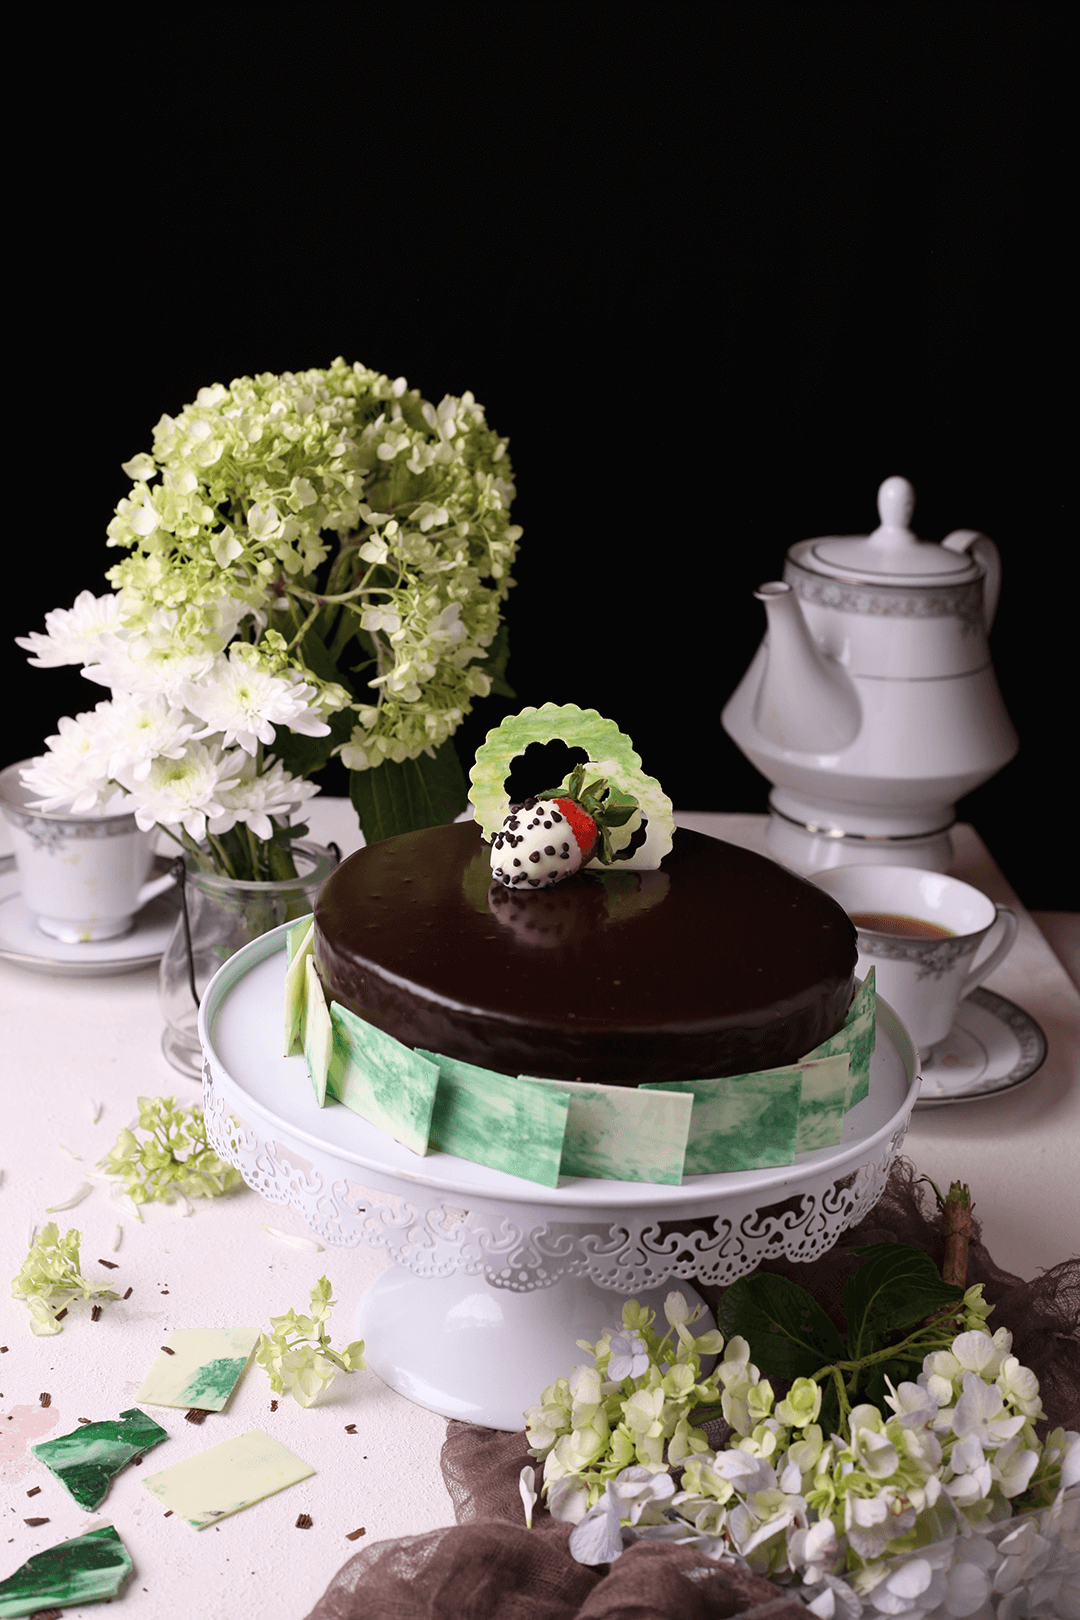 Chocolate Cake by Hotel Galadari yaluyalu